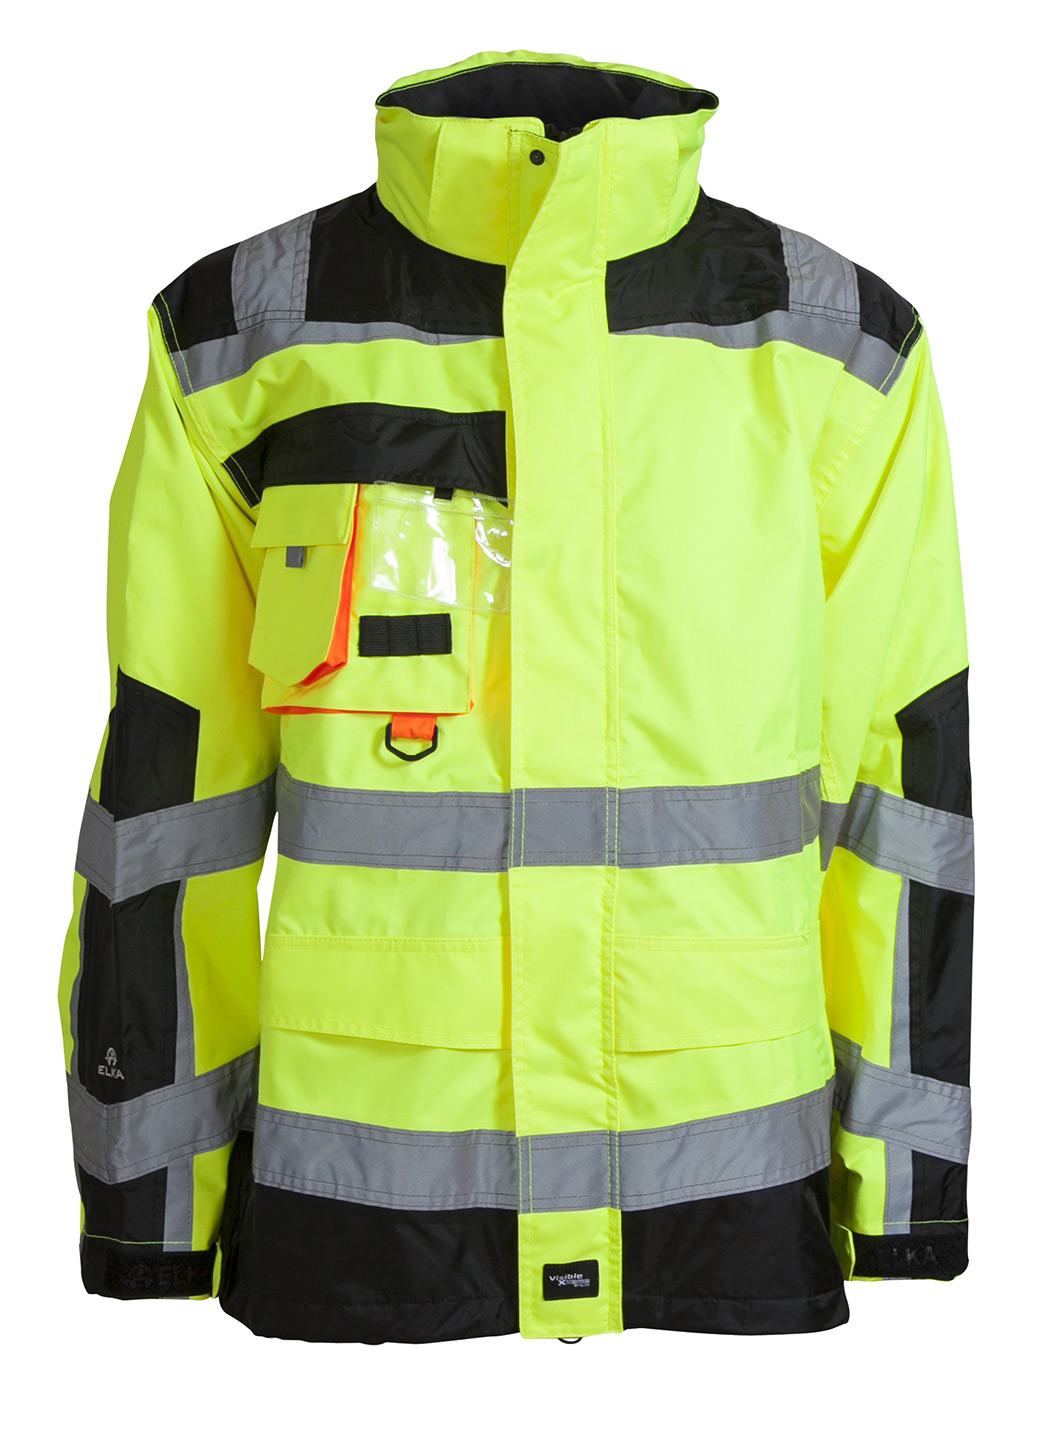 ELKA-Regenschutz, -Regen-Nässe-Wetter-Schutz-Jacke, VISIBLE XTREME, warngelb/schwarz